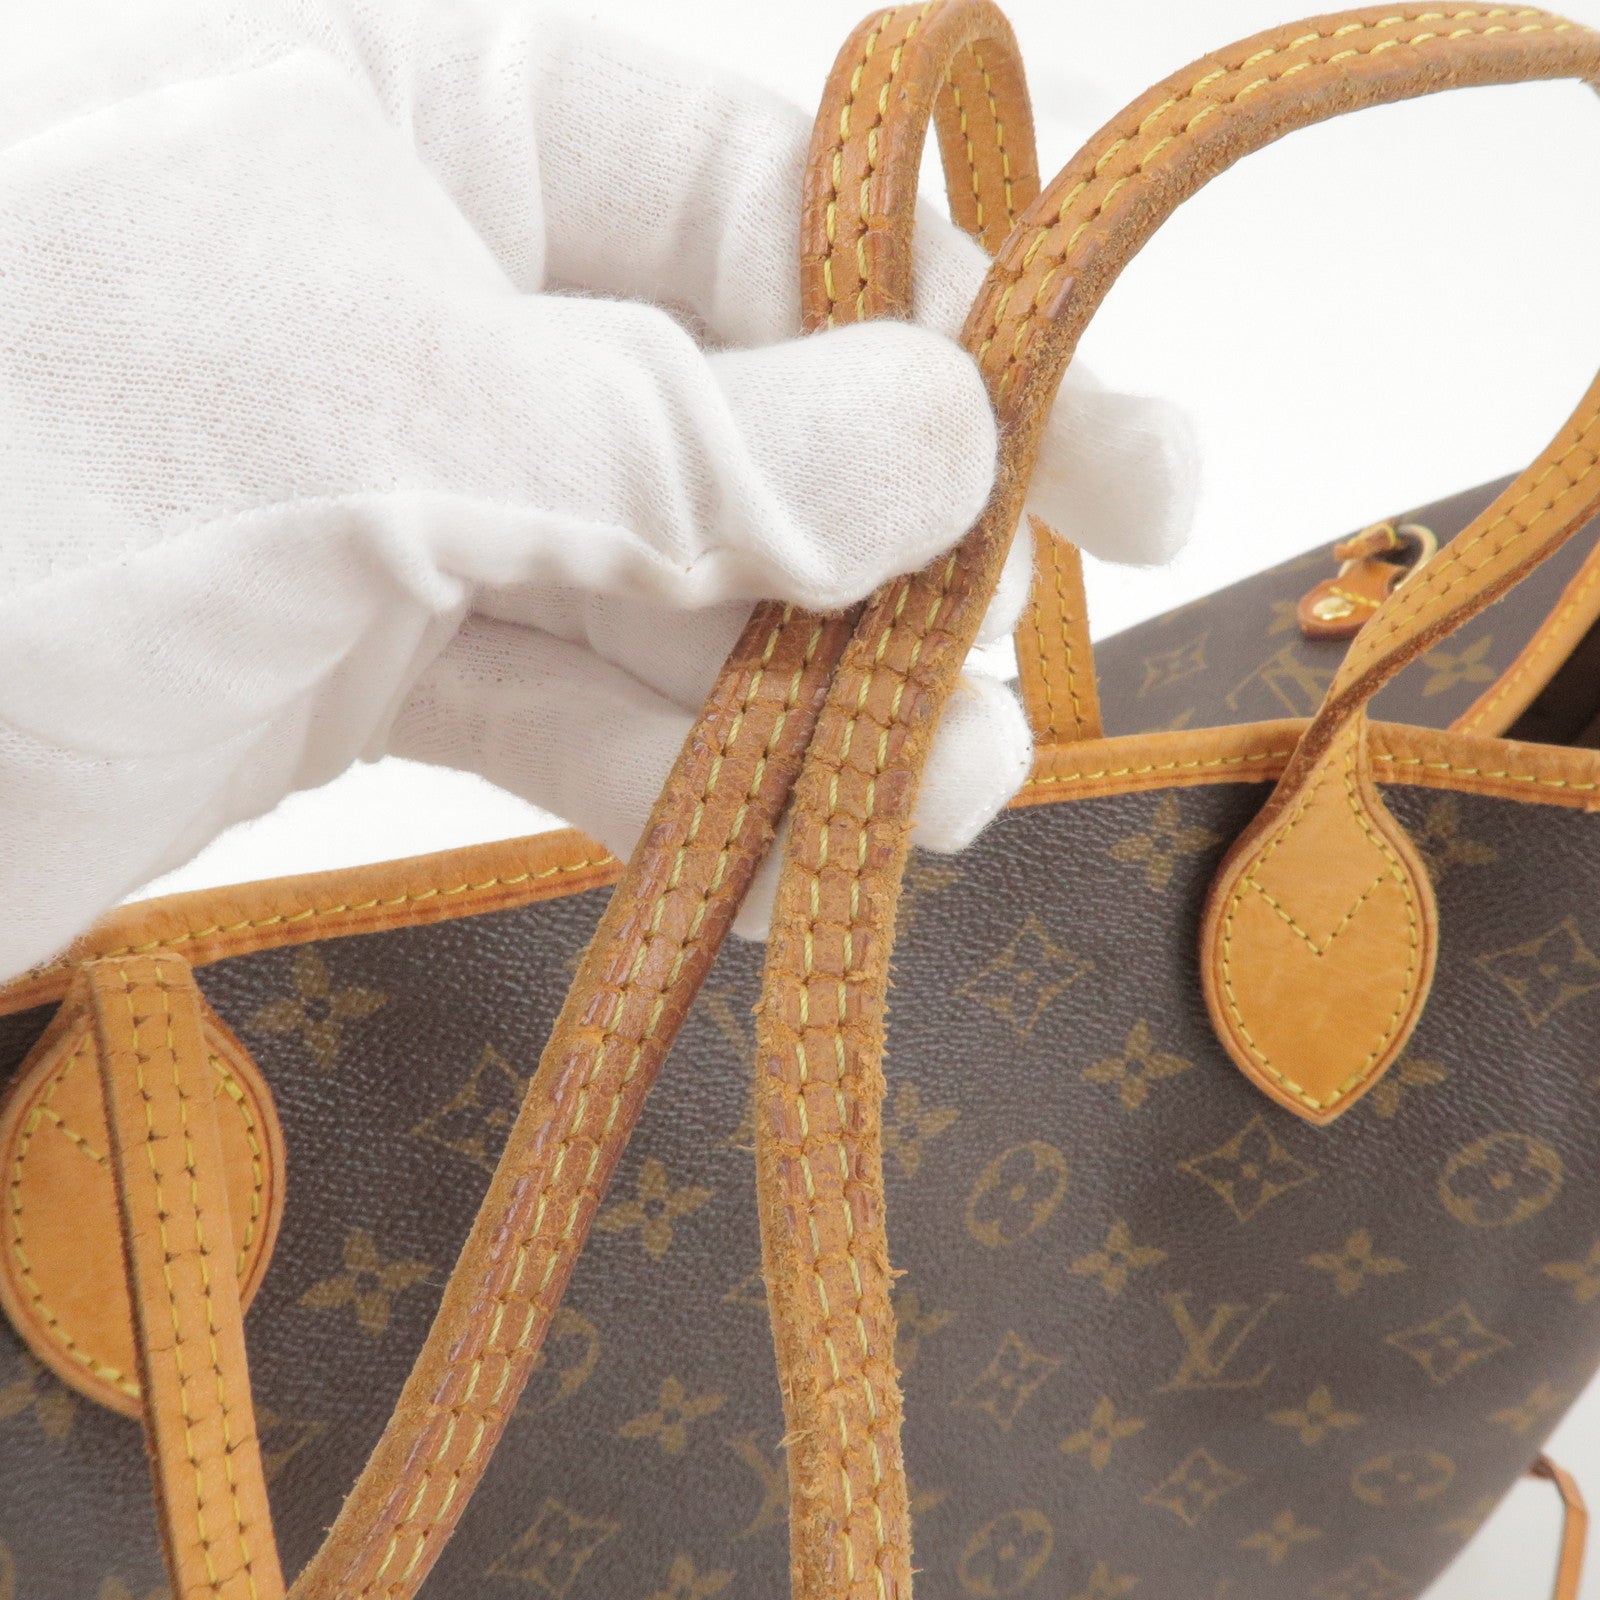 Louis Vuitton 2005 Pre-owned Monogram Crossbody Bag